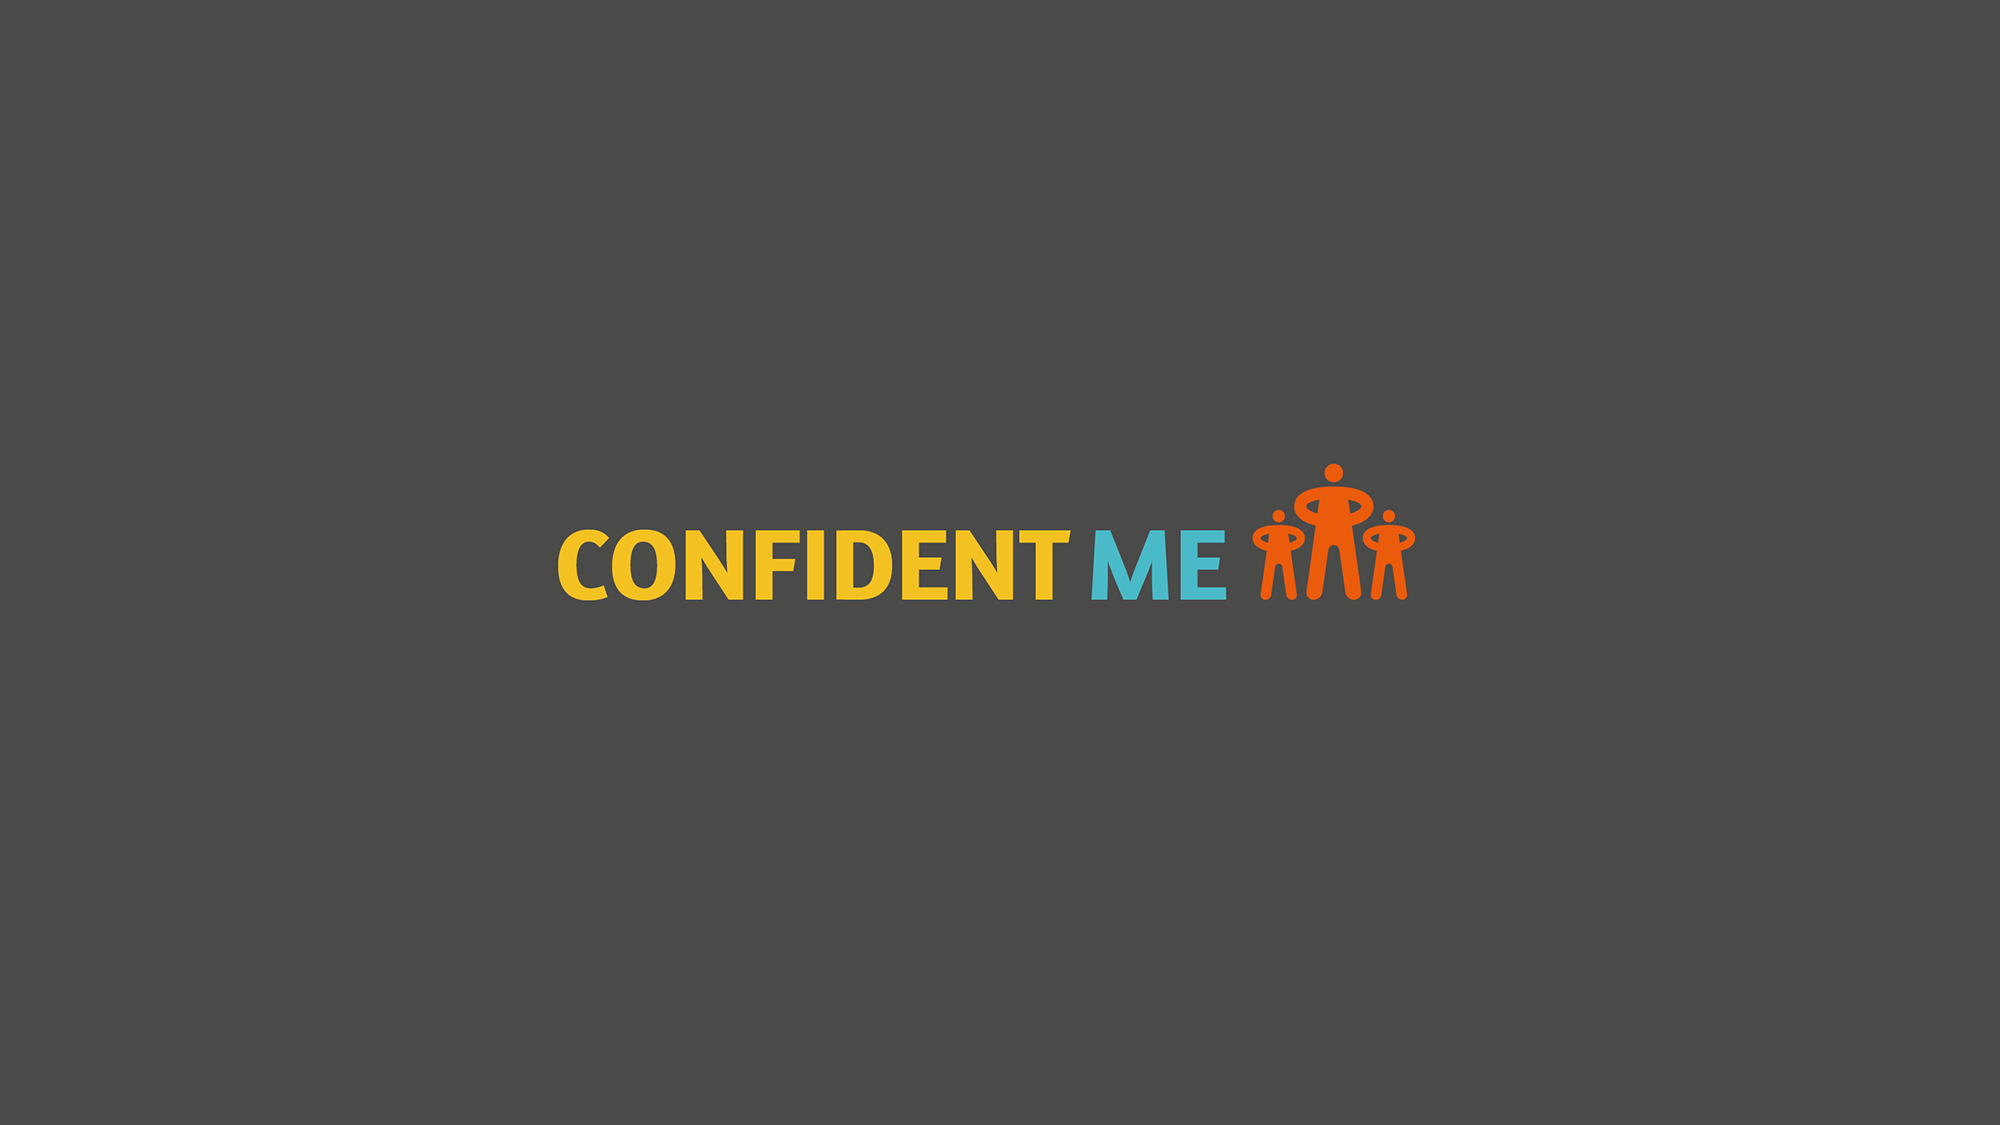 ConfidentME Week – Finding work as an international student